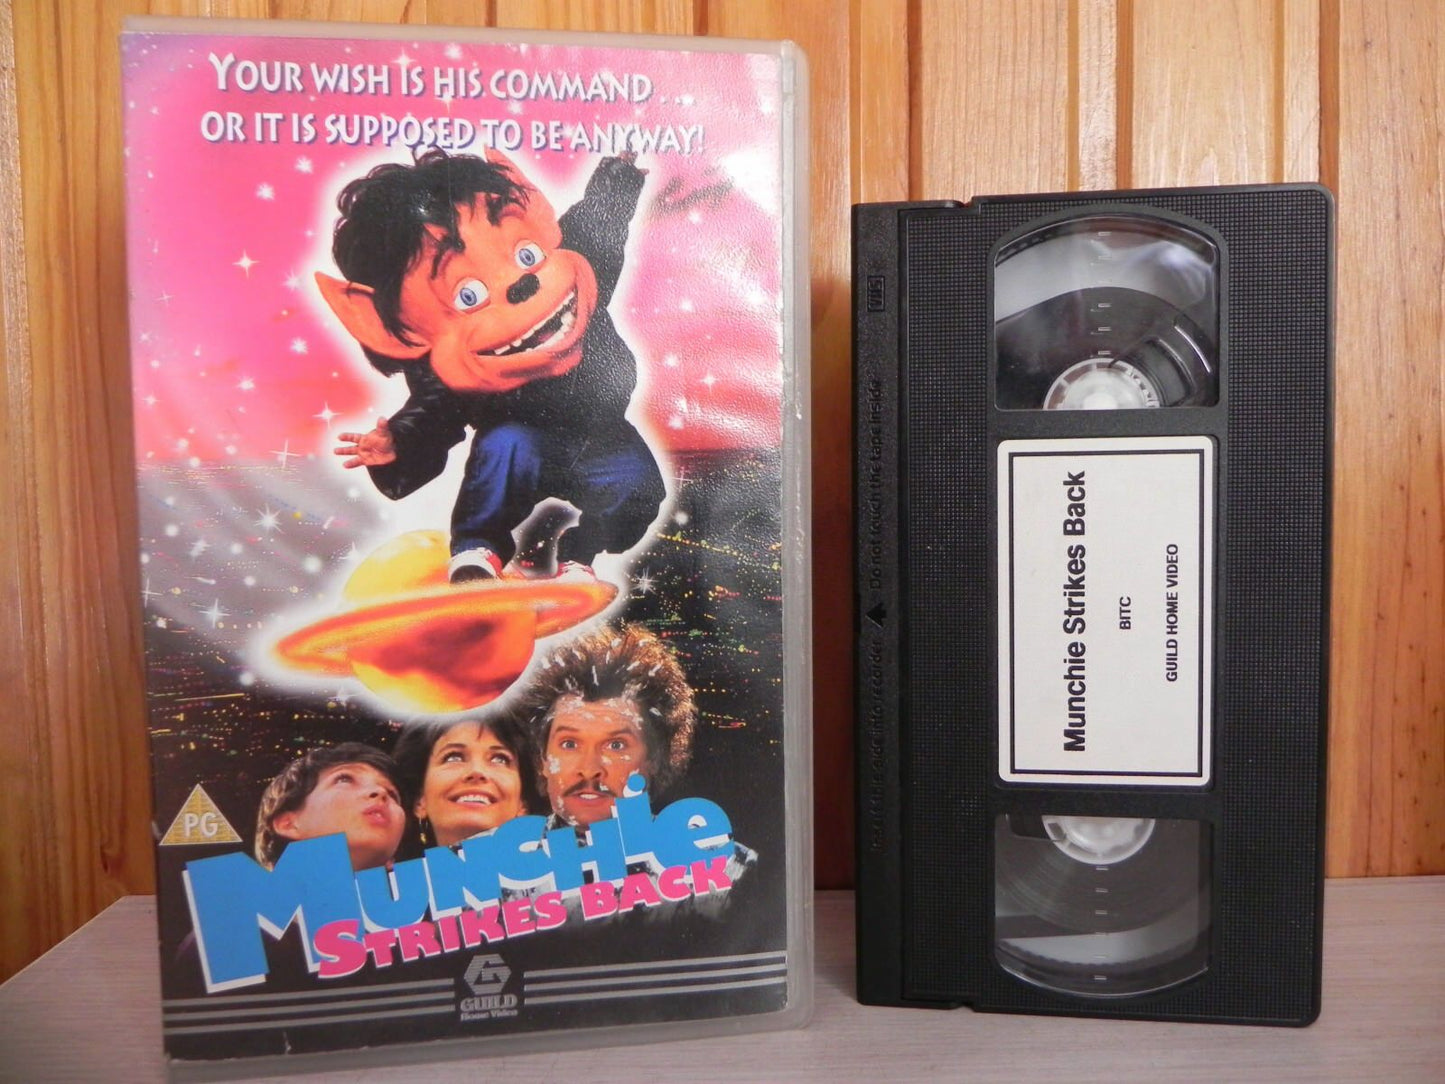 Munchie Strikes Back - Morning Stoner Movie - Sci-Fi Comedy - Sample Copy - VHS-